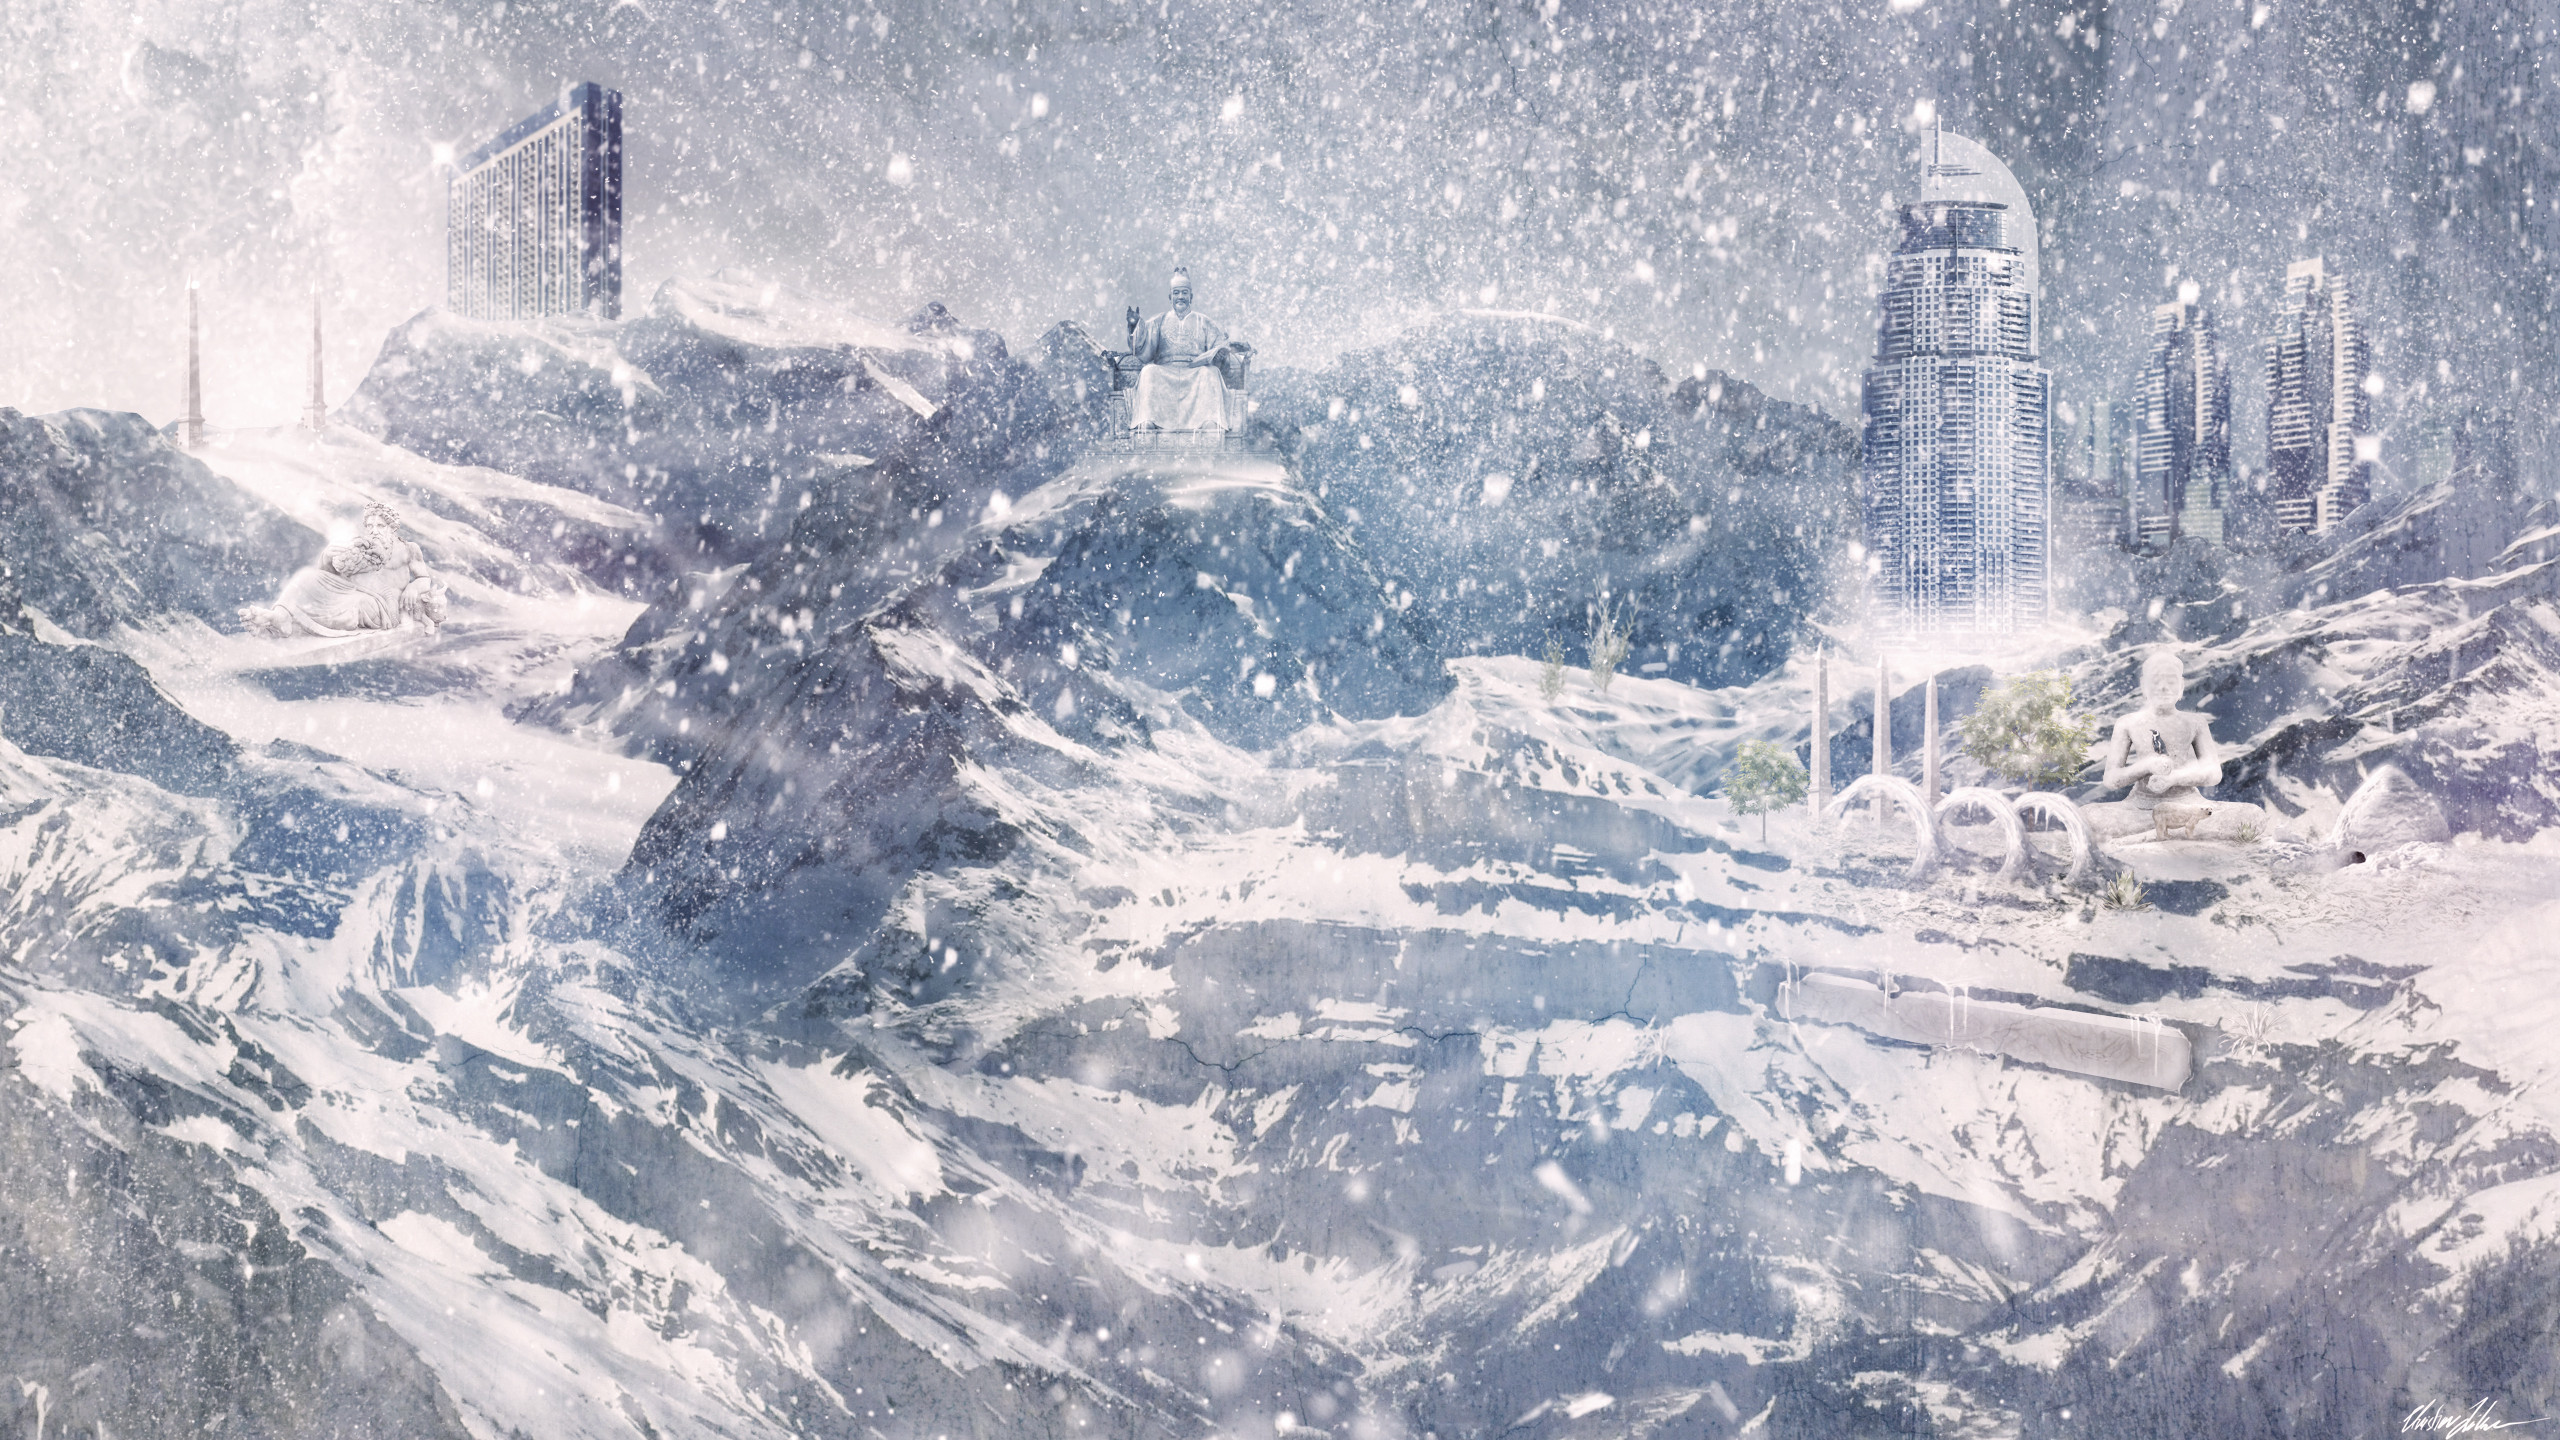 2560x1440 Snow Storm Wallpapers - Wallpaper Cave Snow Storm Wallpapers - Wallpaper  Cave | Weather - Hail